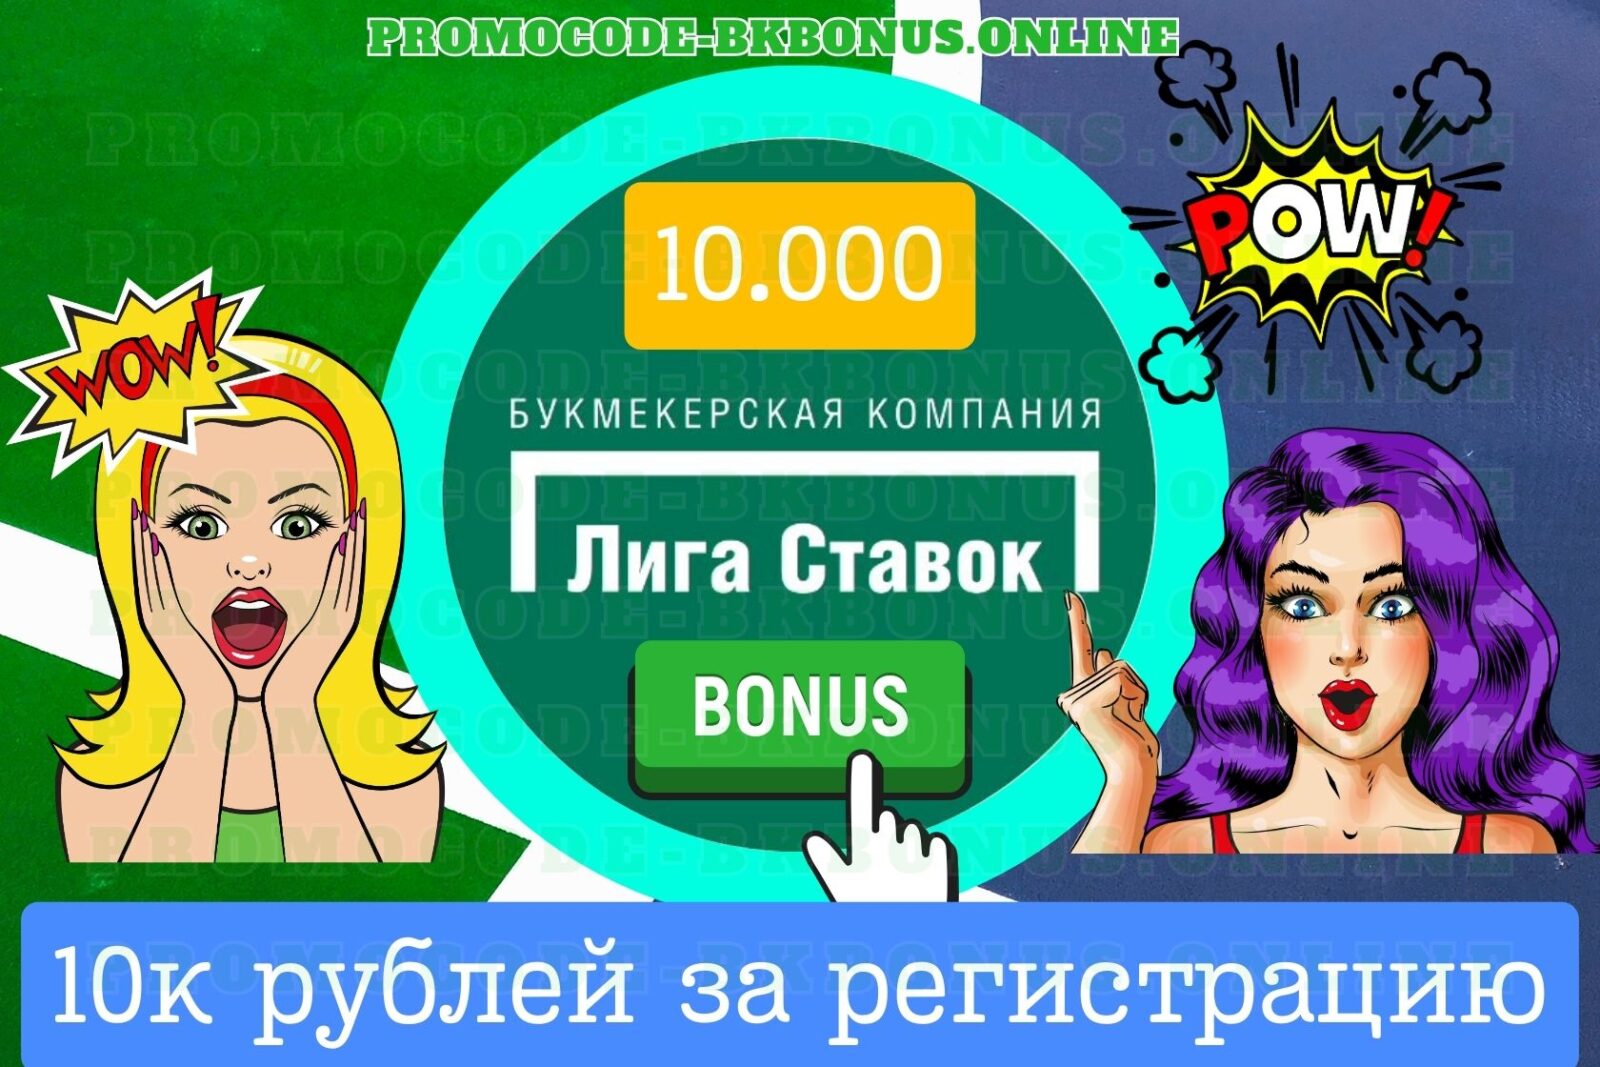 bonus-liga-stavok-10-000-promokod-fribet-bonus-bukmekerskaya-kontora-stavki-na-sport-kopiya-91